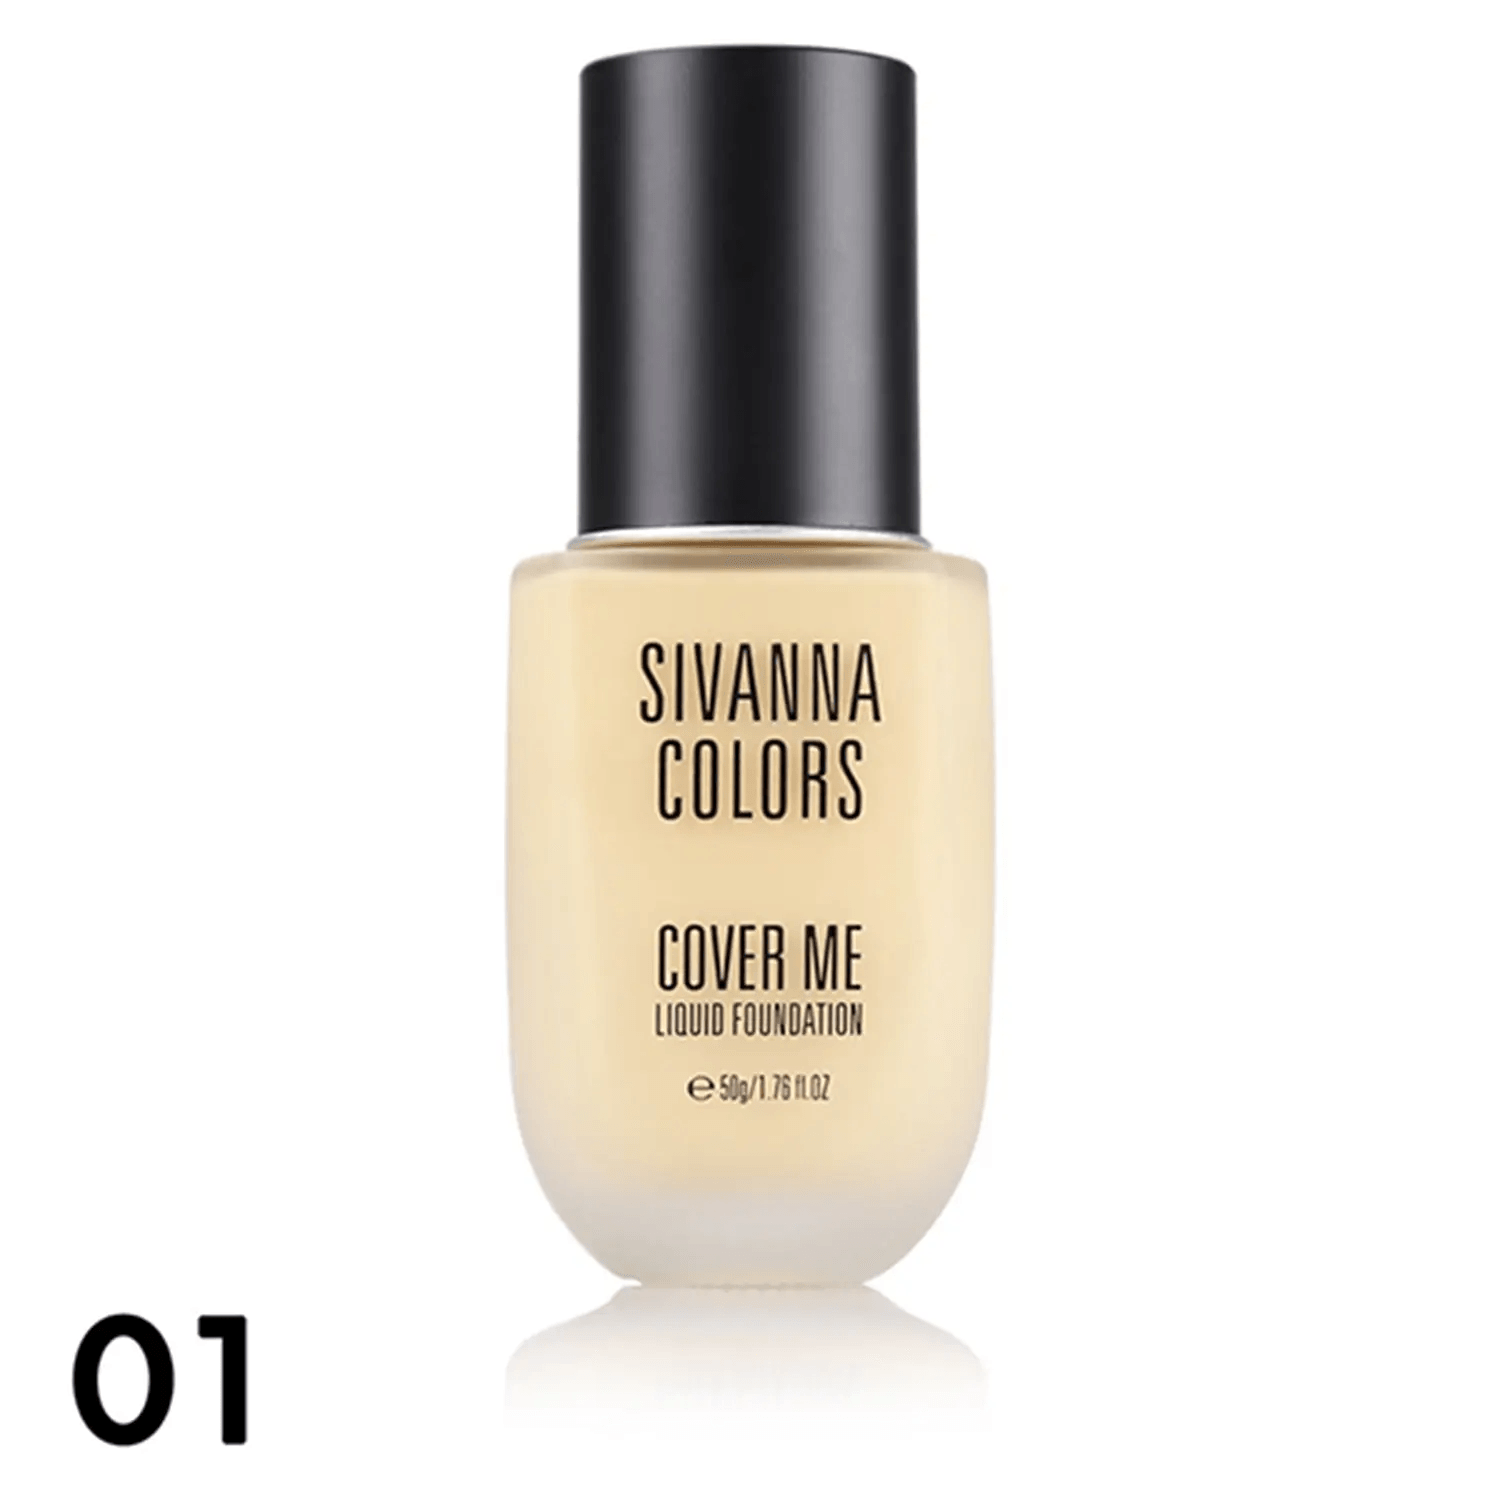 Sivanna | Sivanna Colors Cover Me Liquid Foundation - 01 Shade (50g)